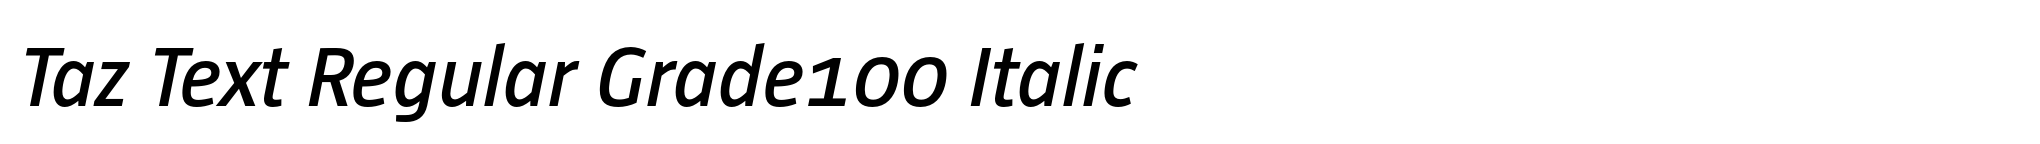 Taz Text Regular Grade100 Italic image